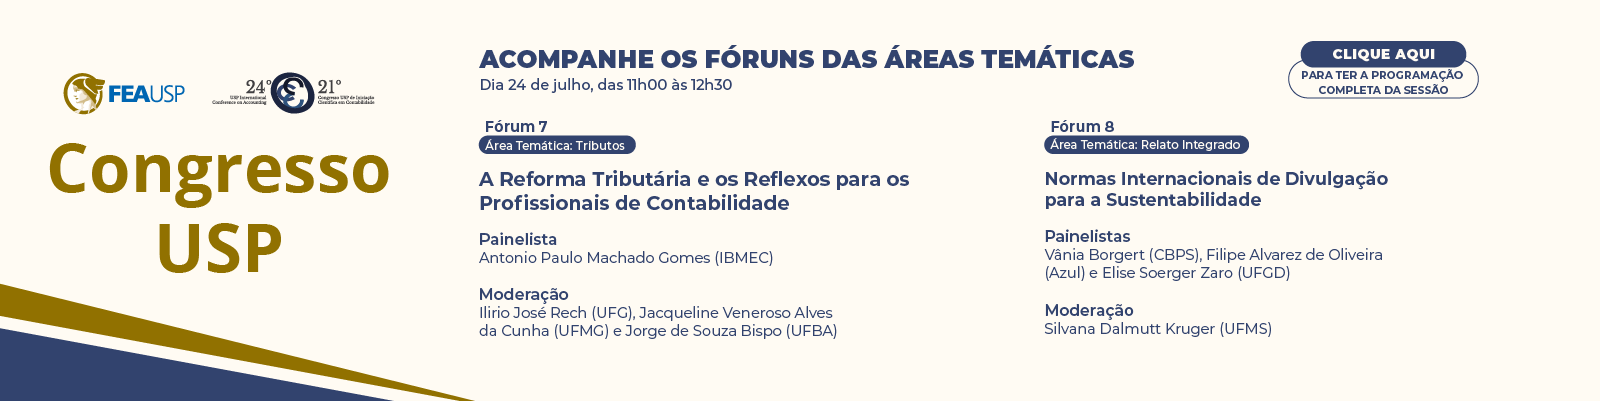 Banner_Forum-das-areas-tematicas_congresso-USP-4